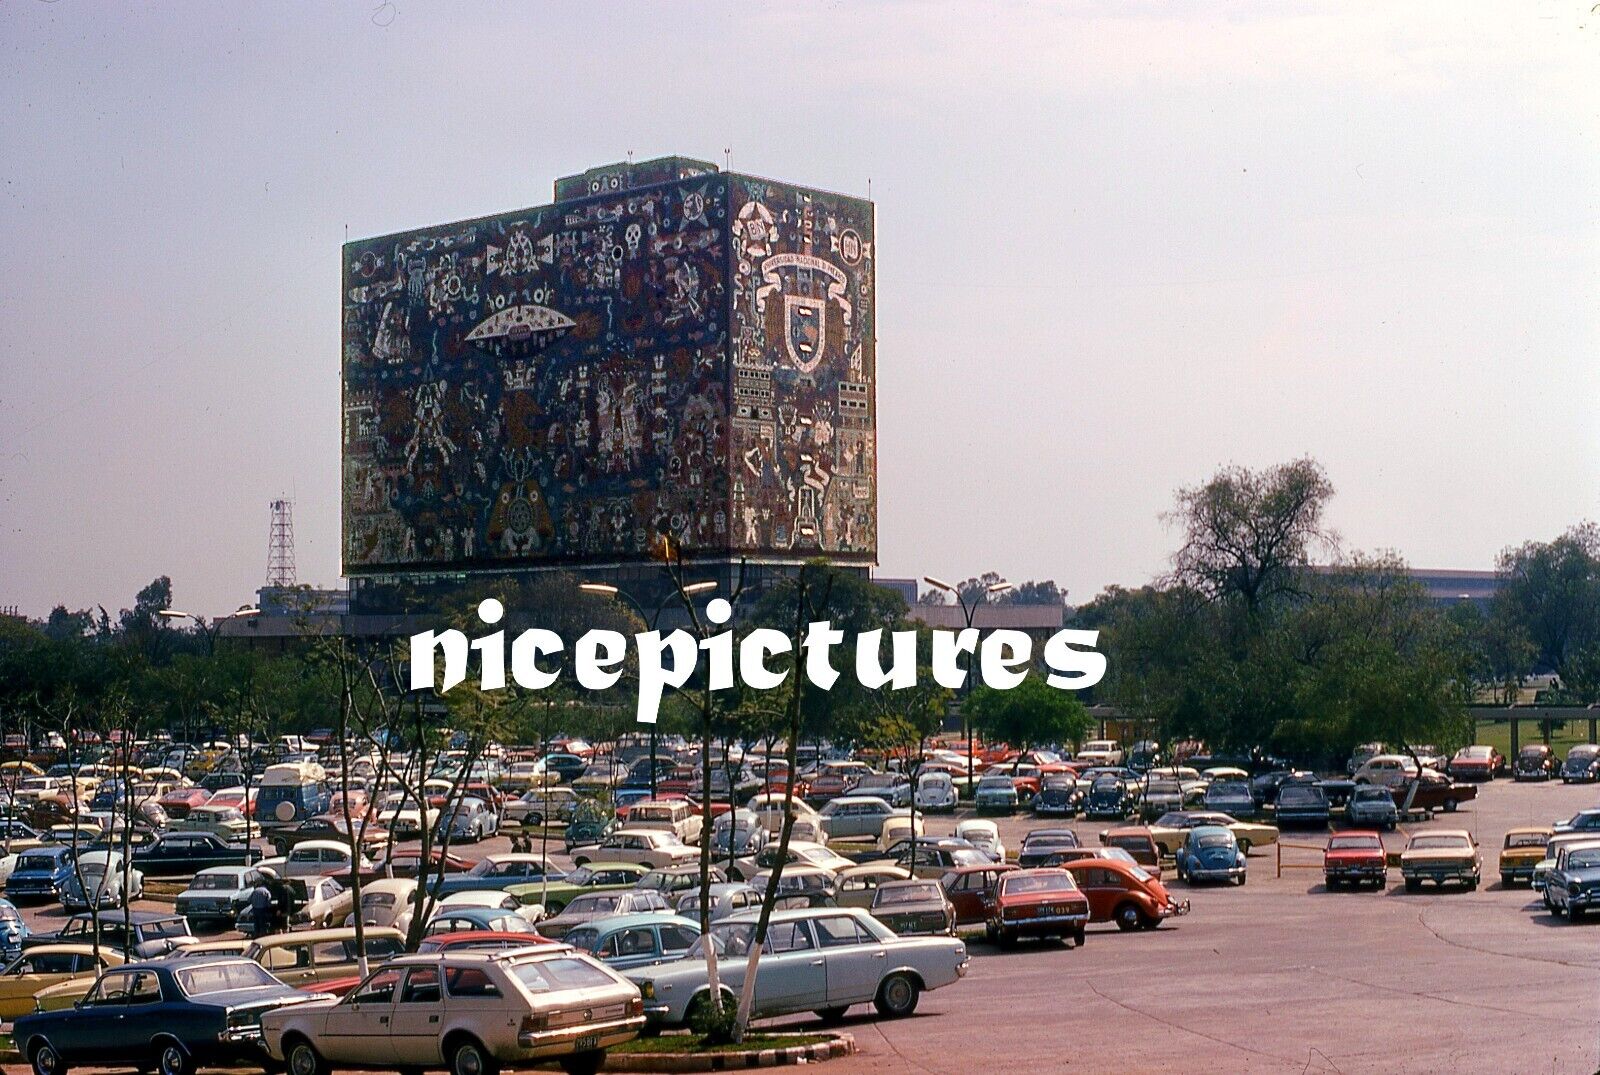 1970s Original slide - Hundreds of Cars Parking lot Mexico City University